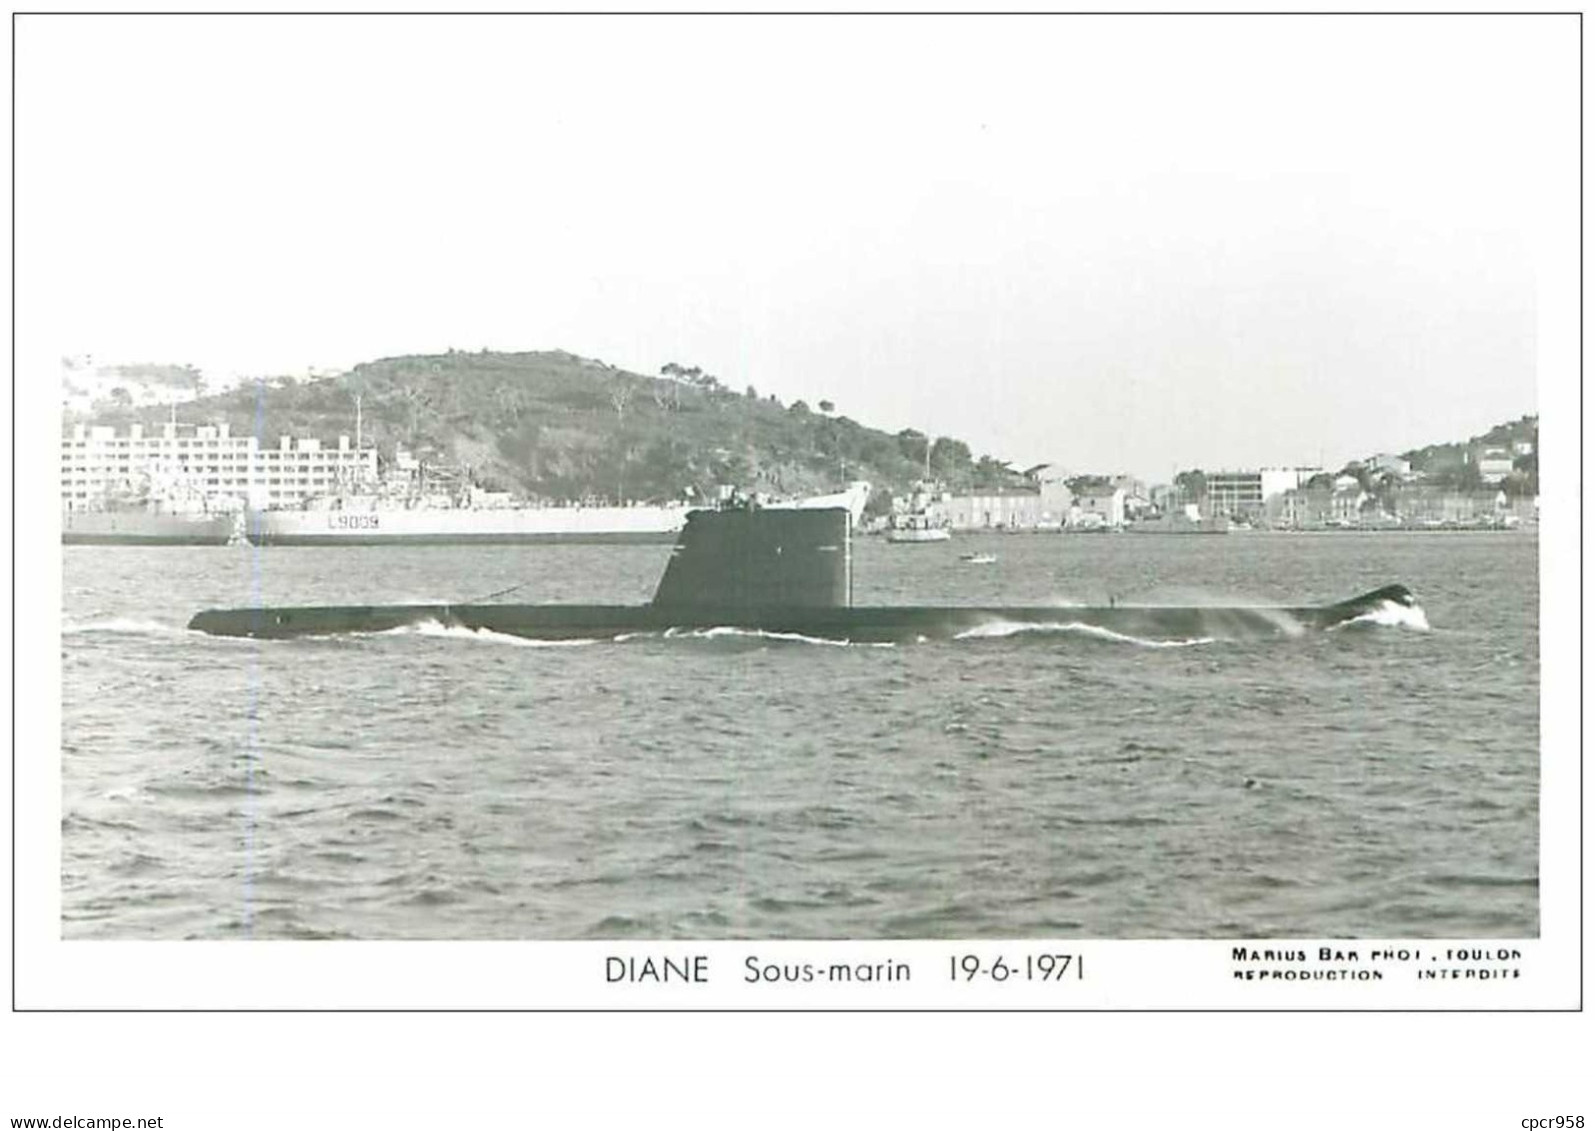 SOUS-MARINS.n°24877.PHOTO DE MARIUS BAR.DIANE.19.6.1971 - Sous-marins